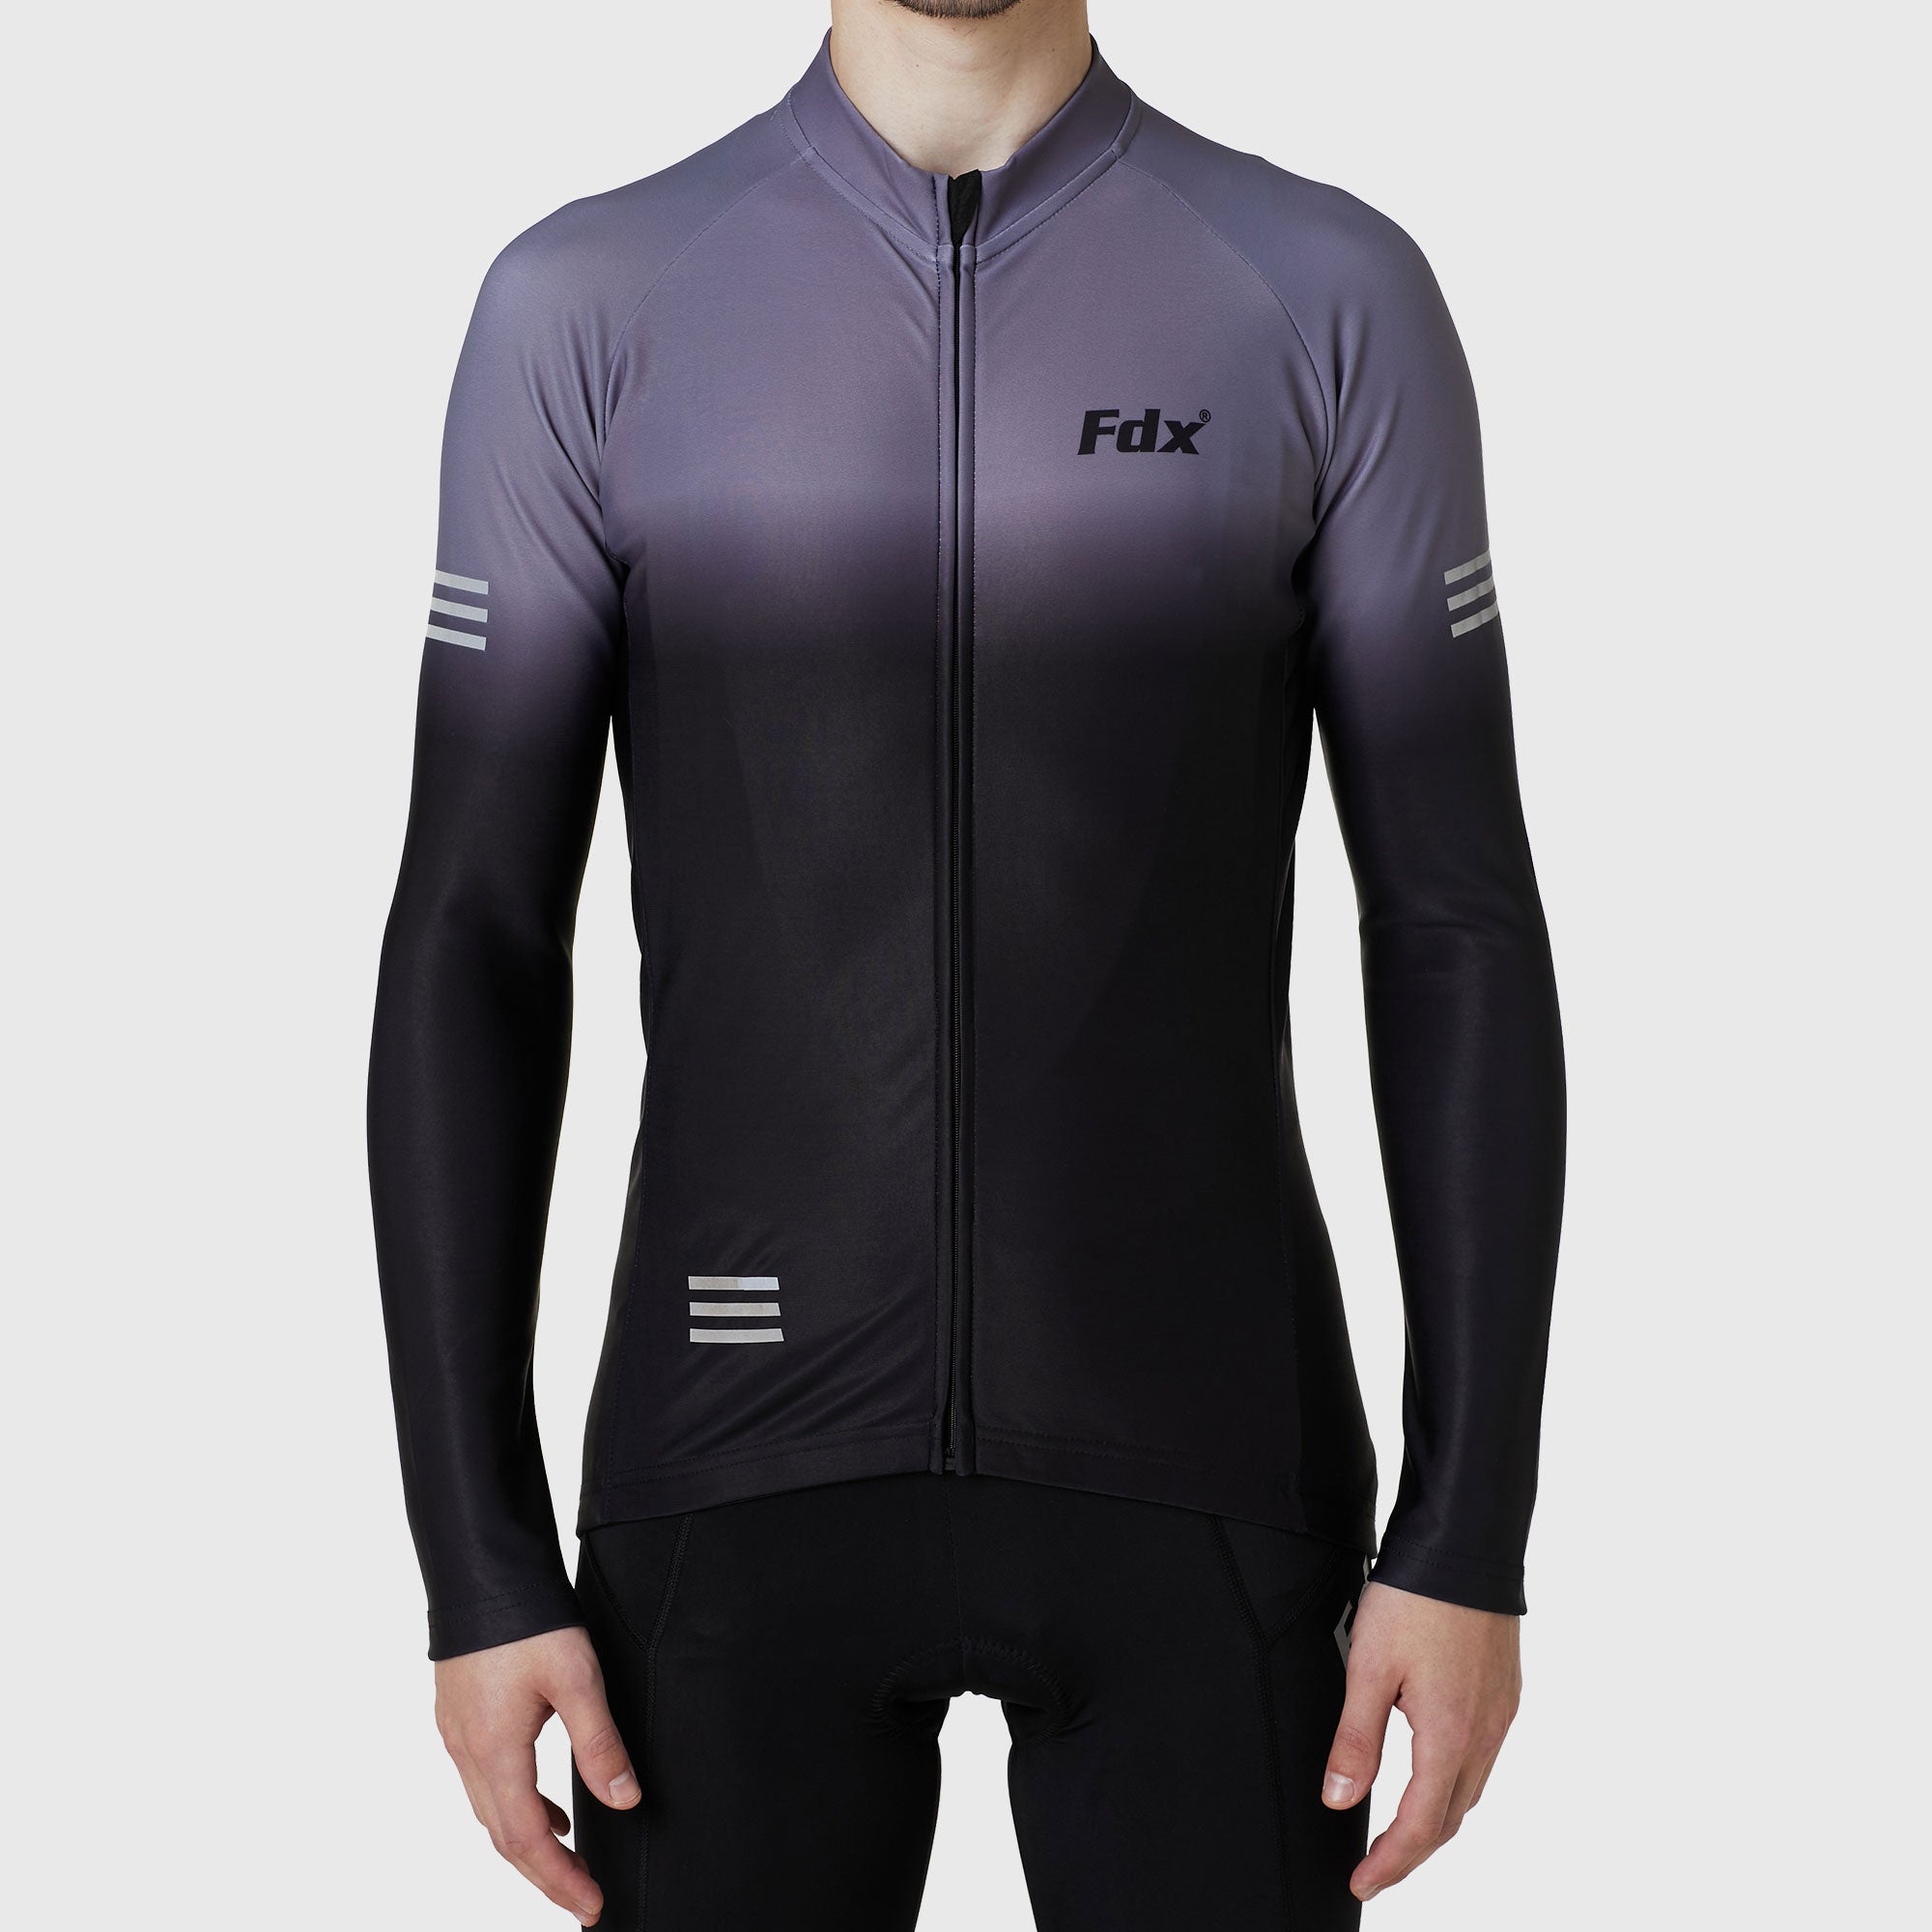 Fdx Mens Grey Long Sleeve Cycling Jersey for Winter Roubaix Thermal Fleece Road Bike Wear Top Full Zipper, Pockets & Hi-viz Reflectors - Duo